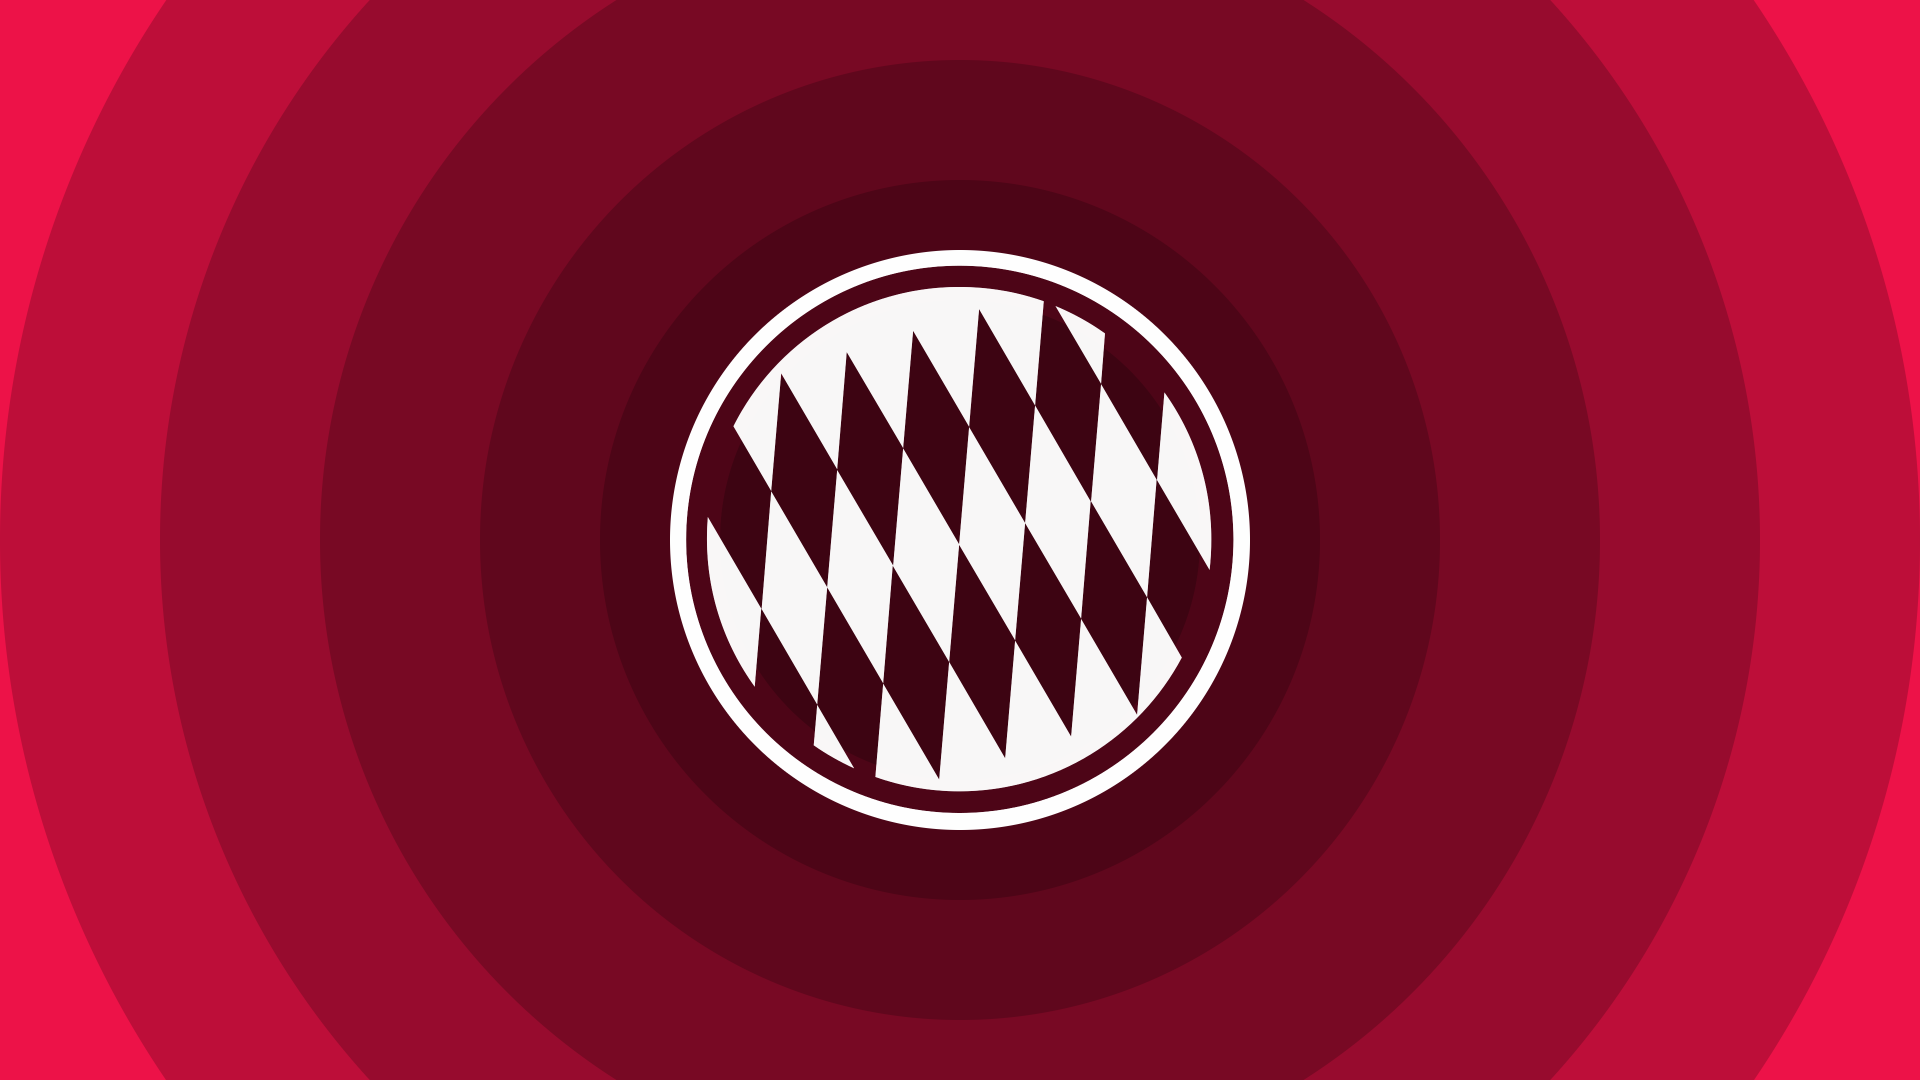 FC Bayern Munich Minimal Logo for 1920 x 1080 HDTV 1080p resolution